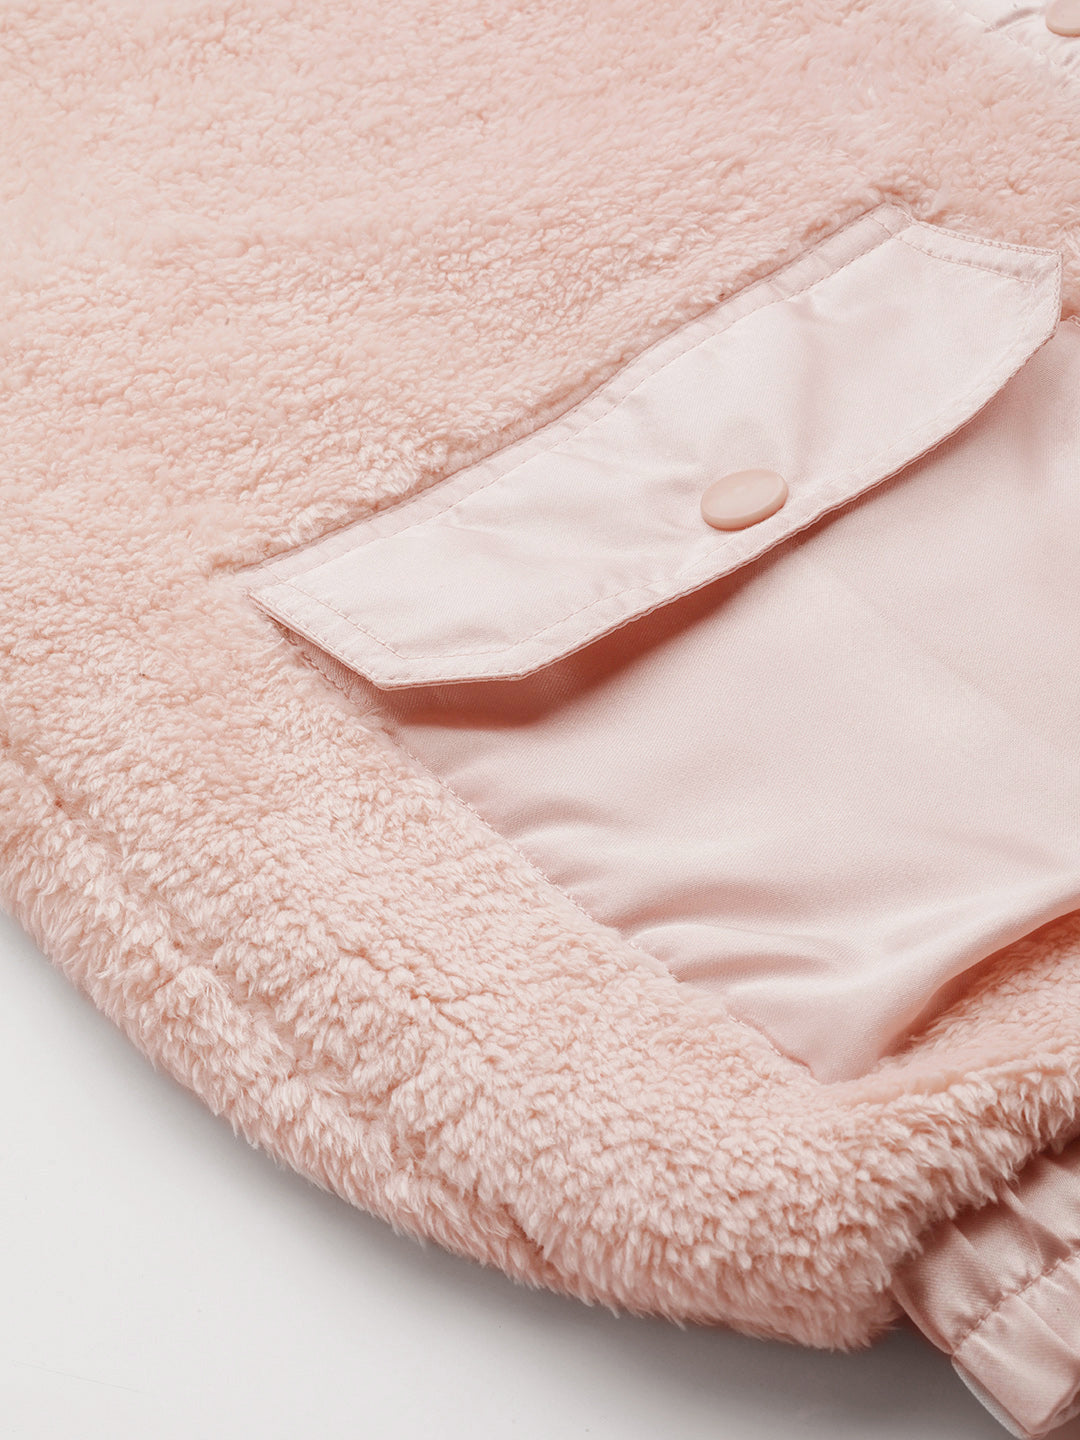 Women Pink Front Pocket Faux Fur Jacket